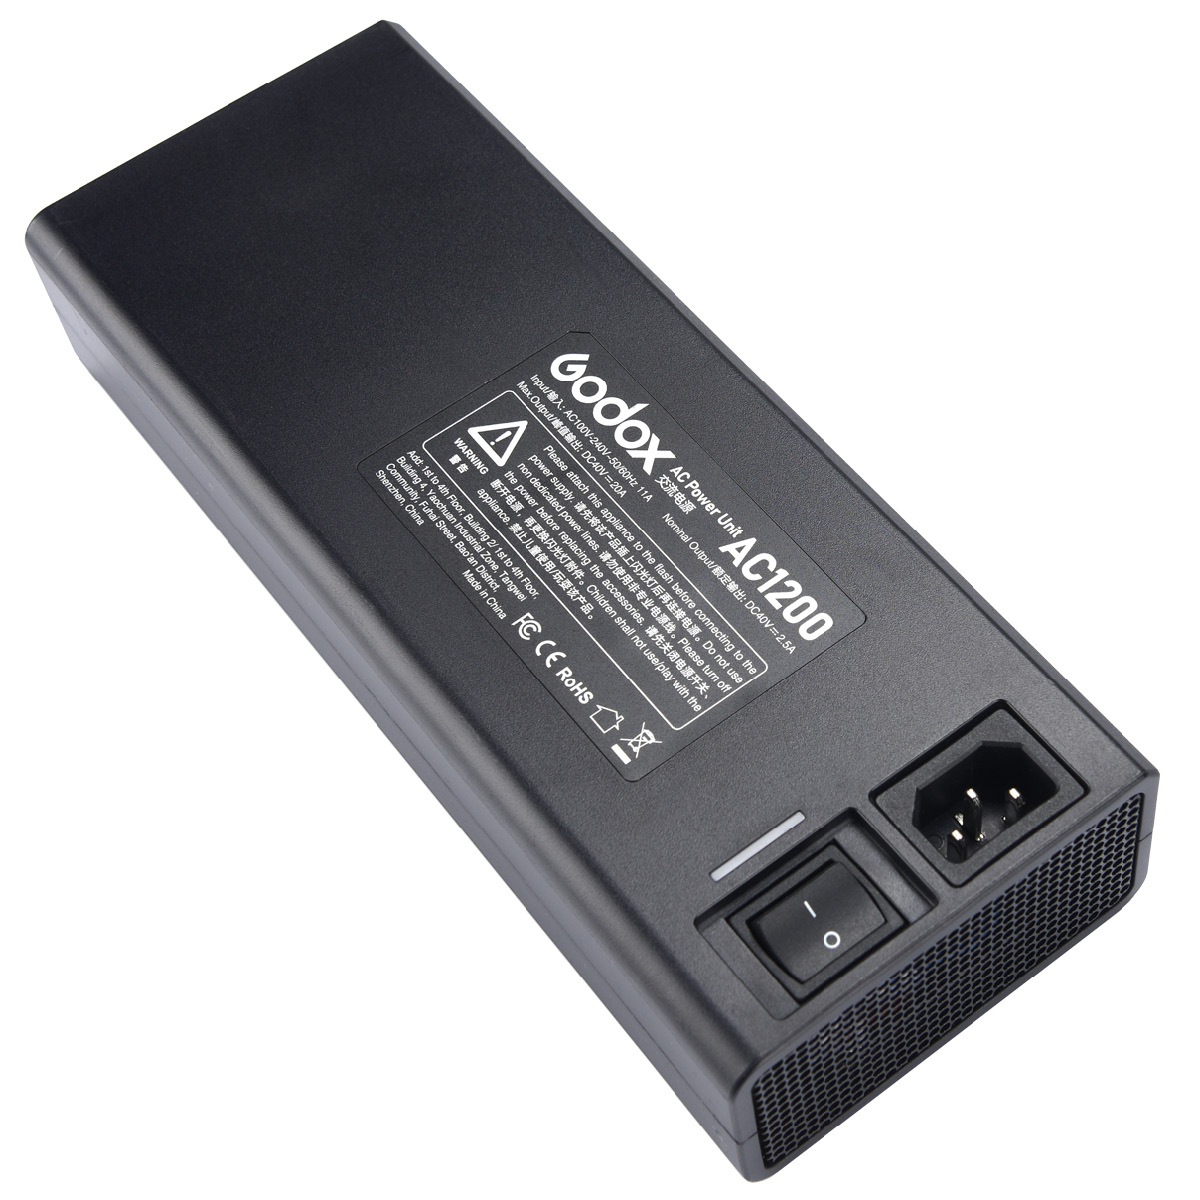 Godox AC 1200 Netzadapter für AD 1200 Pro